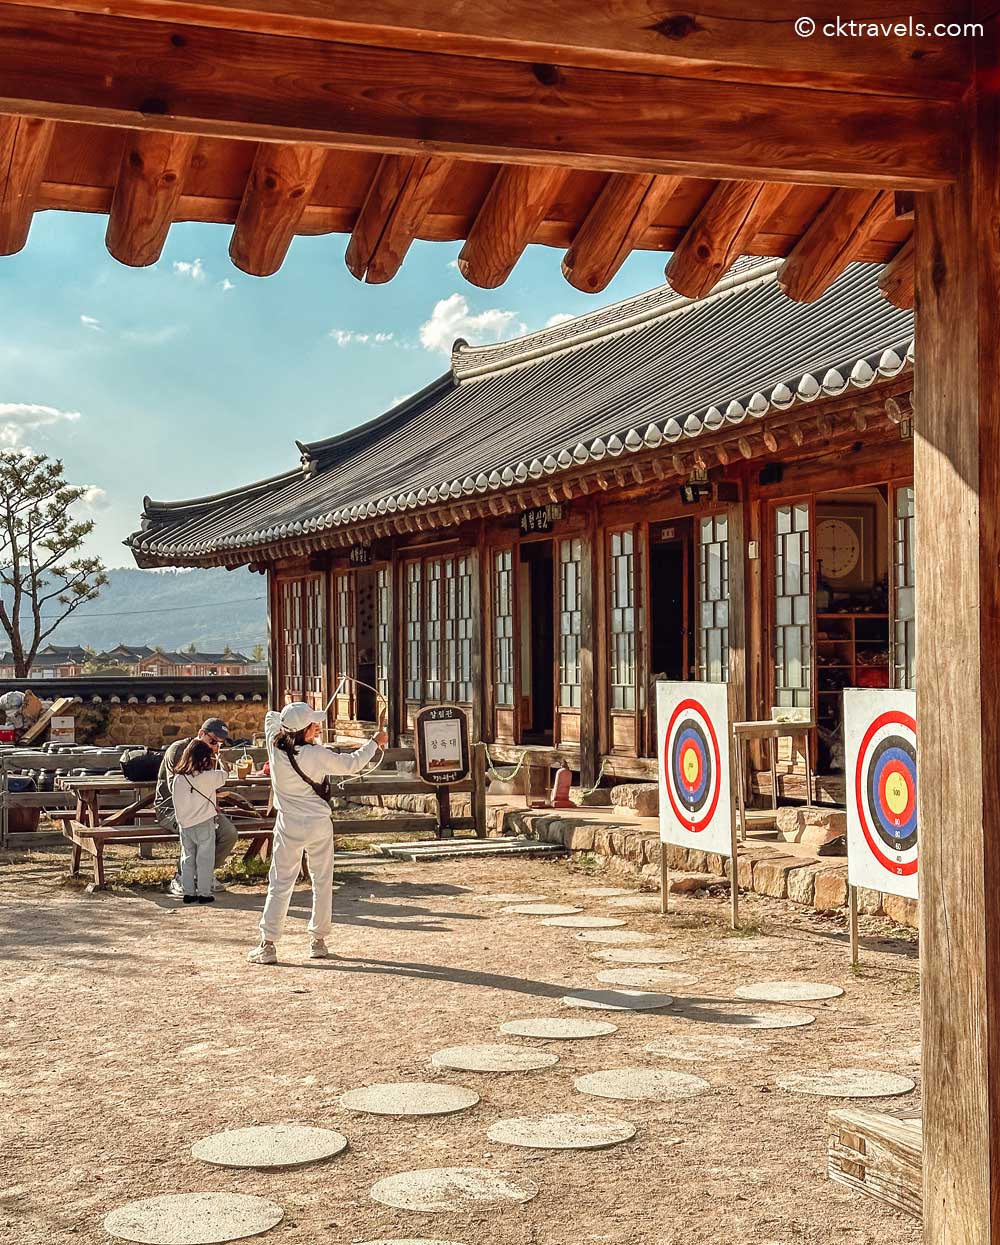 Gyeongju Gyochon Traditional Village